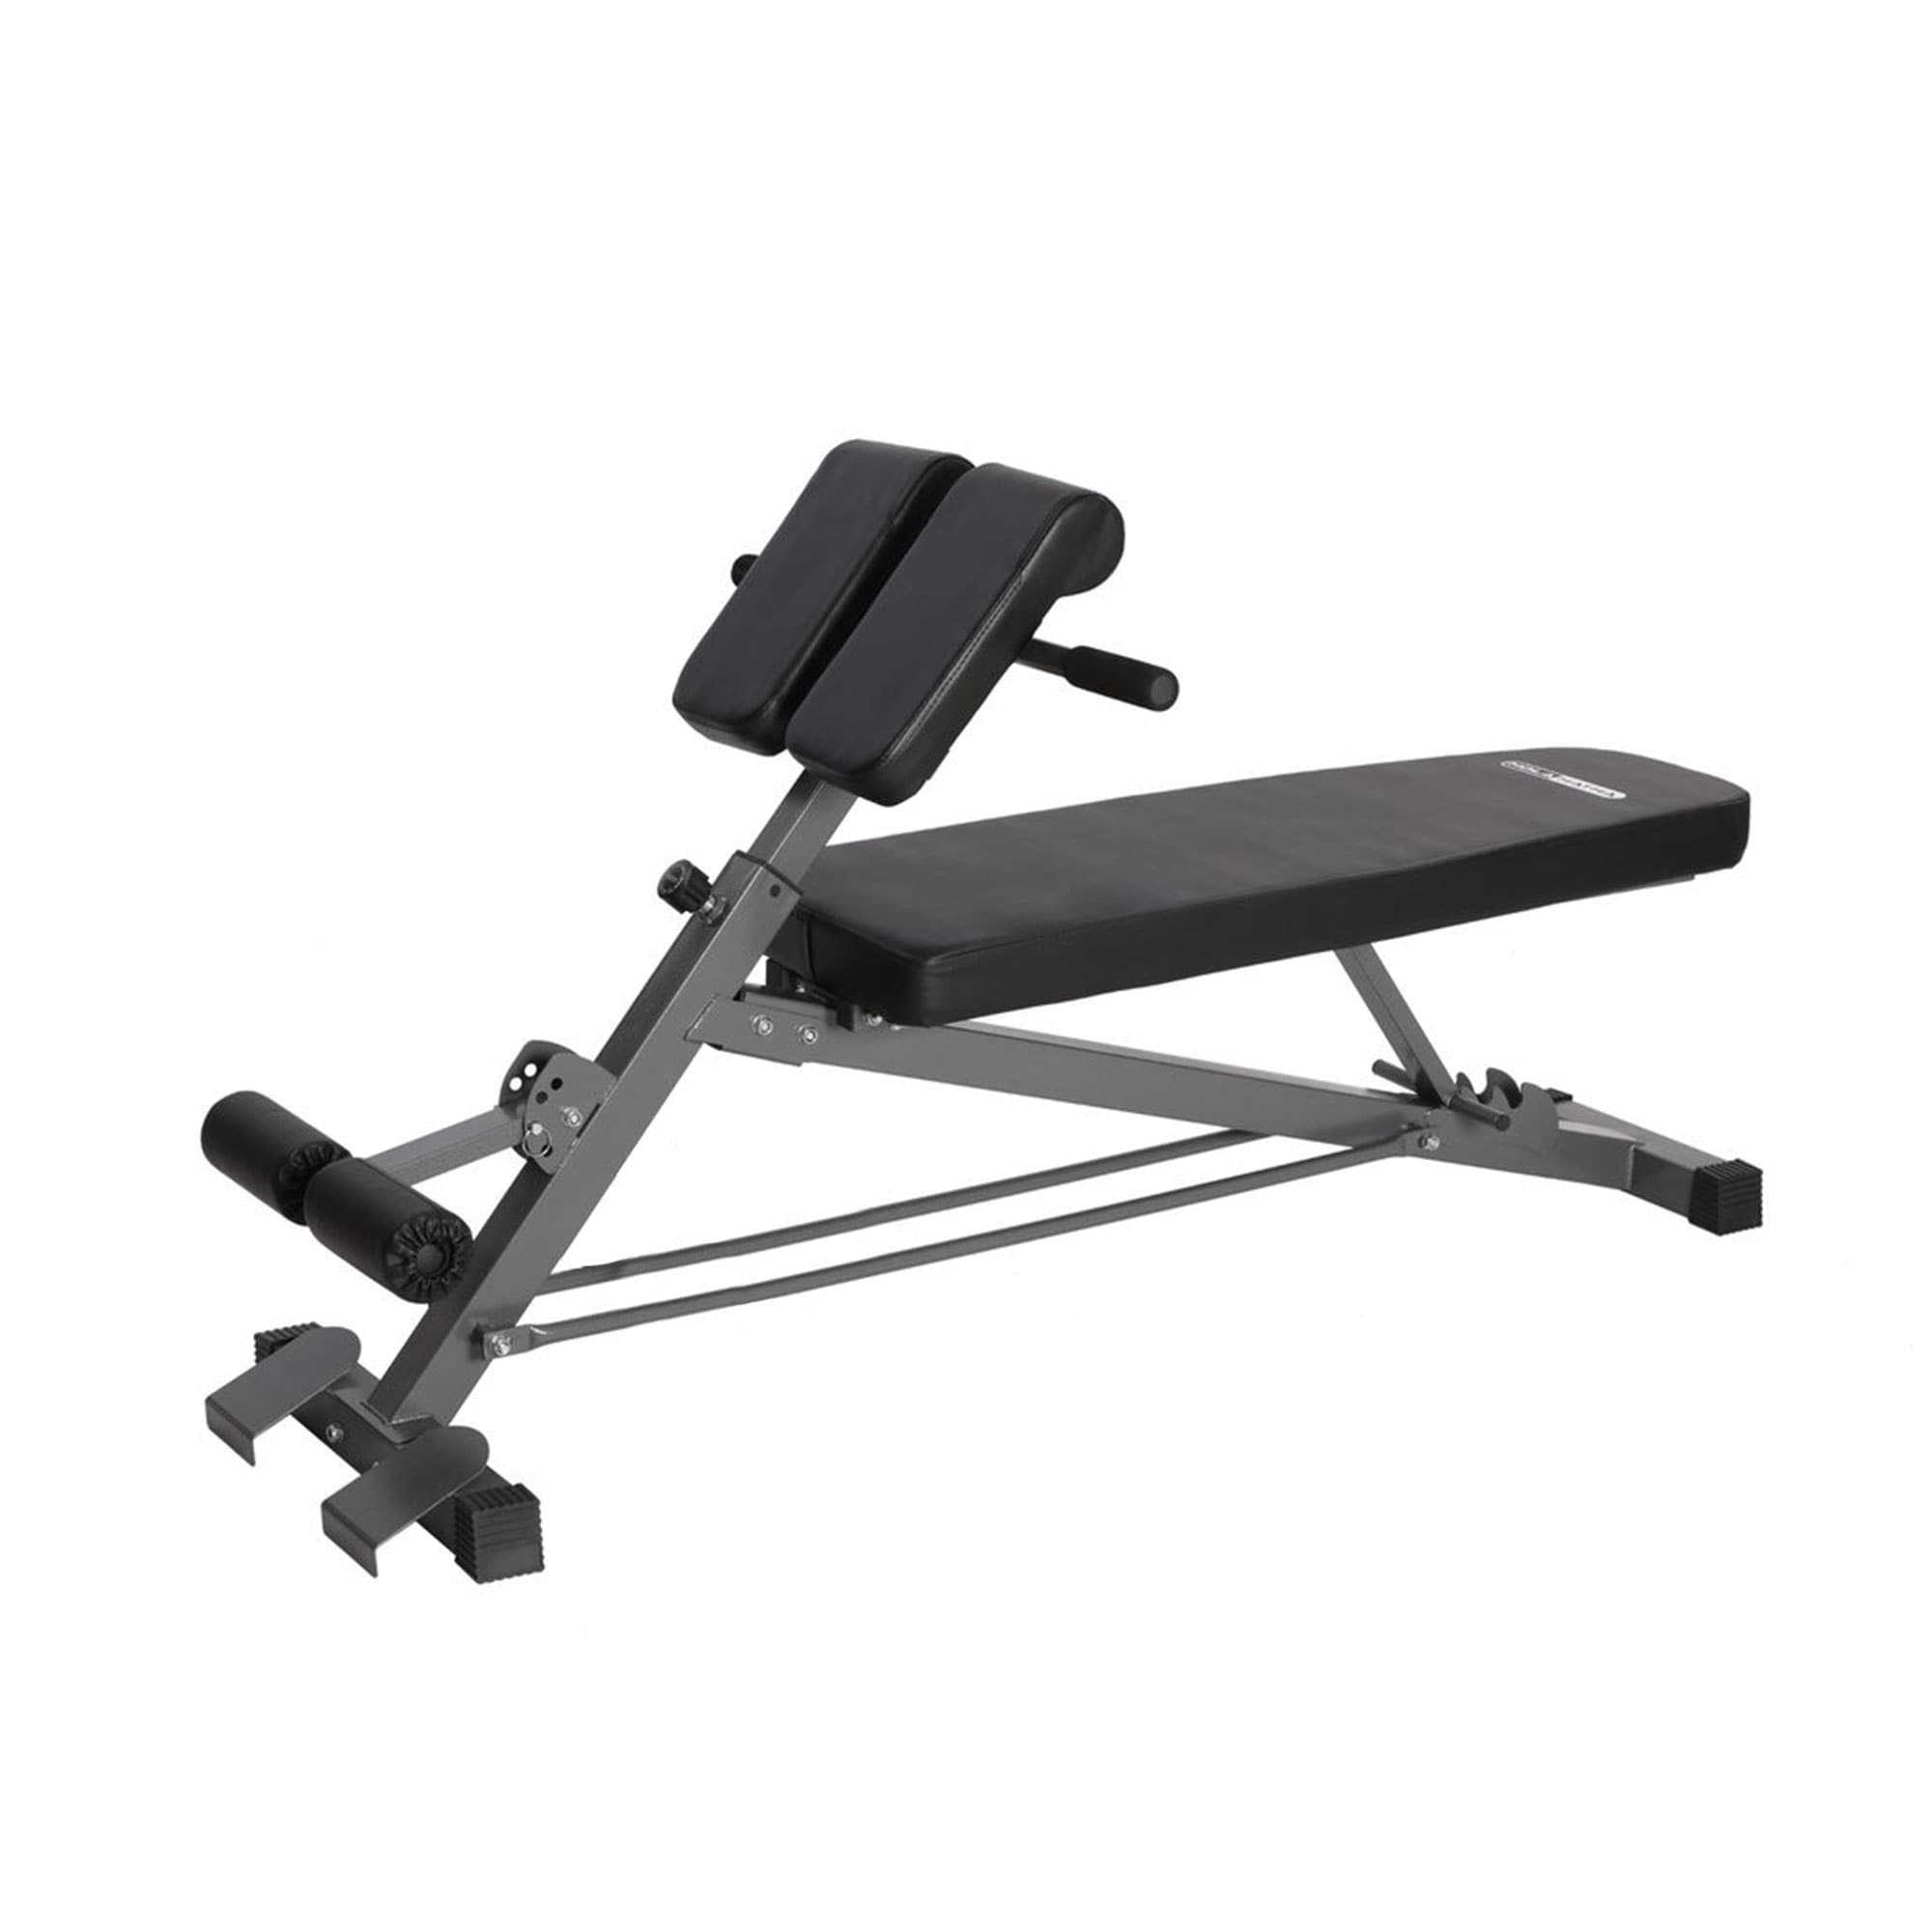 Aero Pilates Premier 700 Foldable Reformer Fitness Machine with